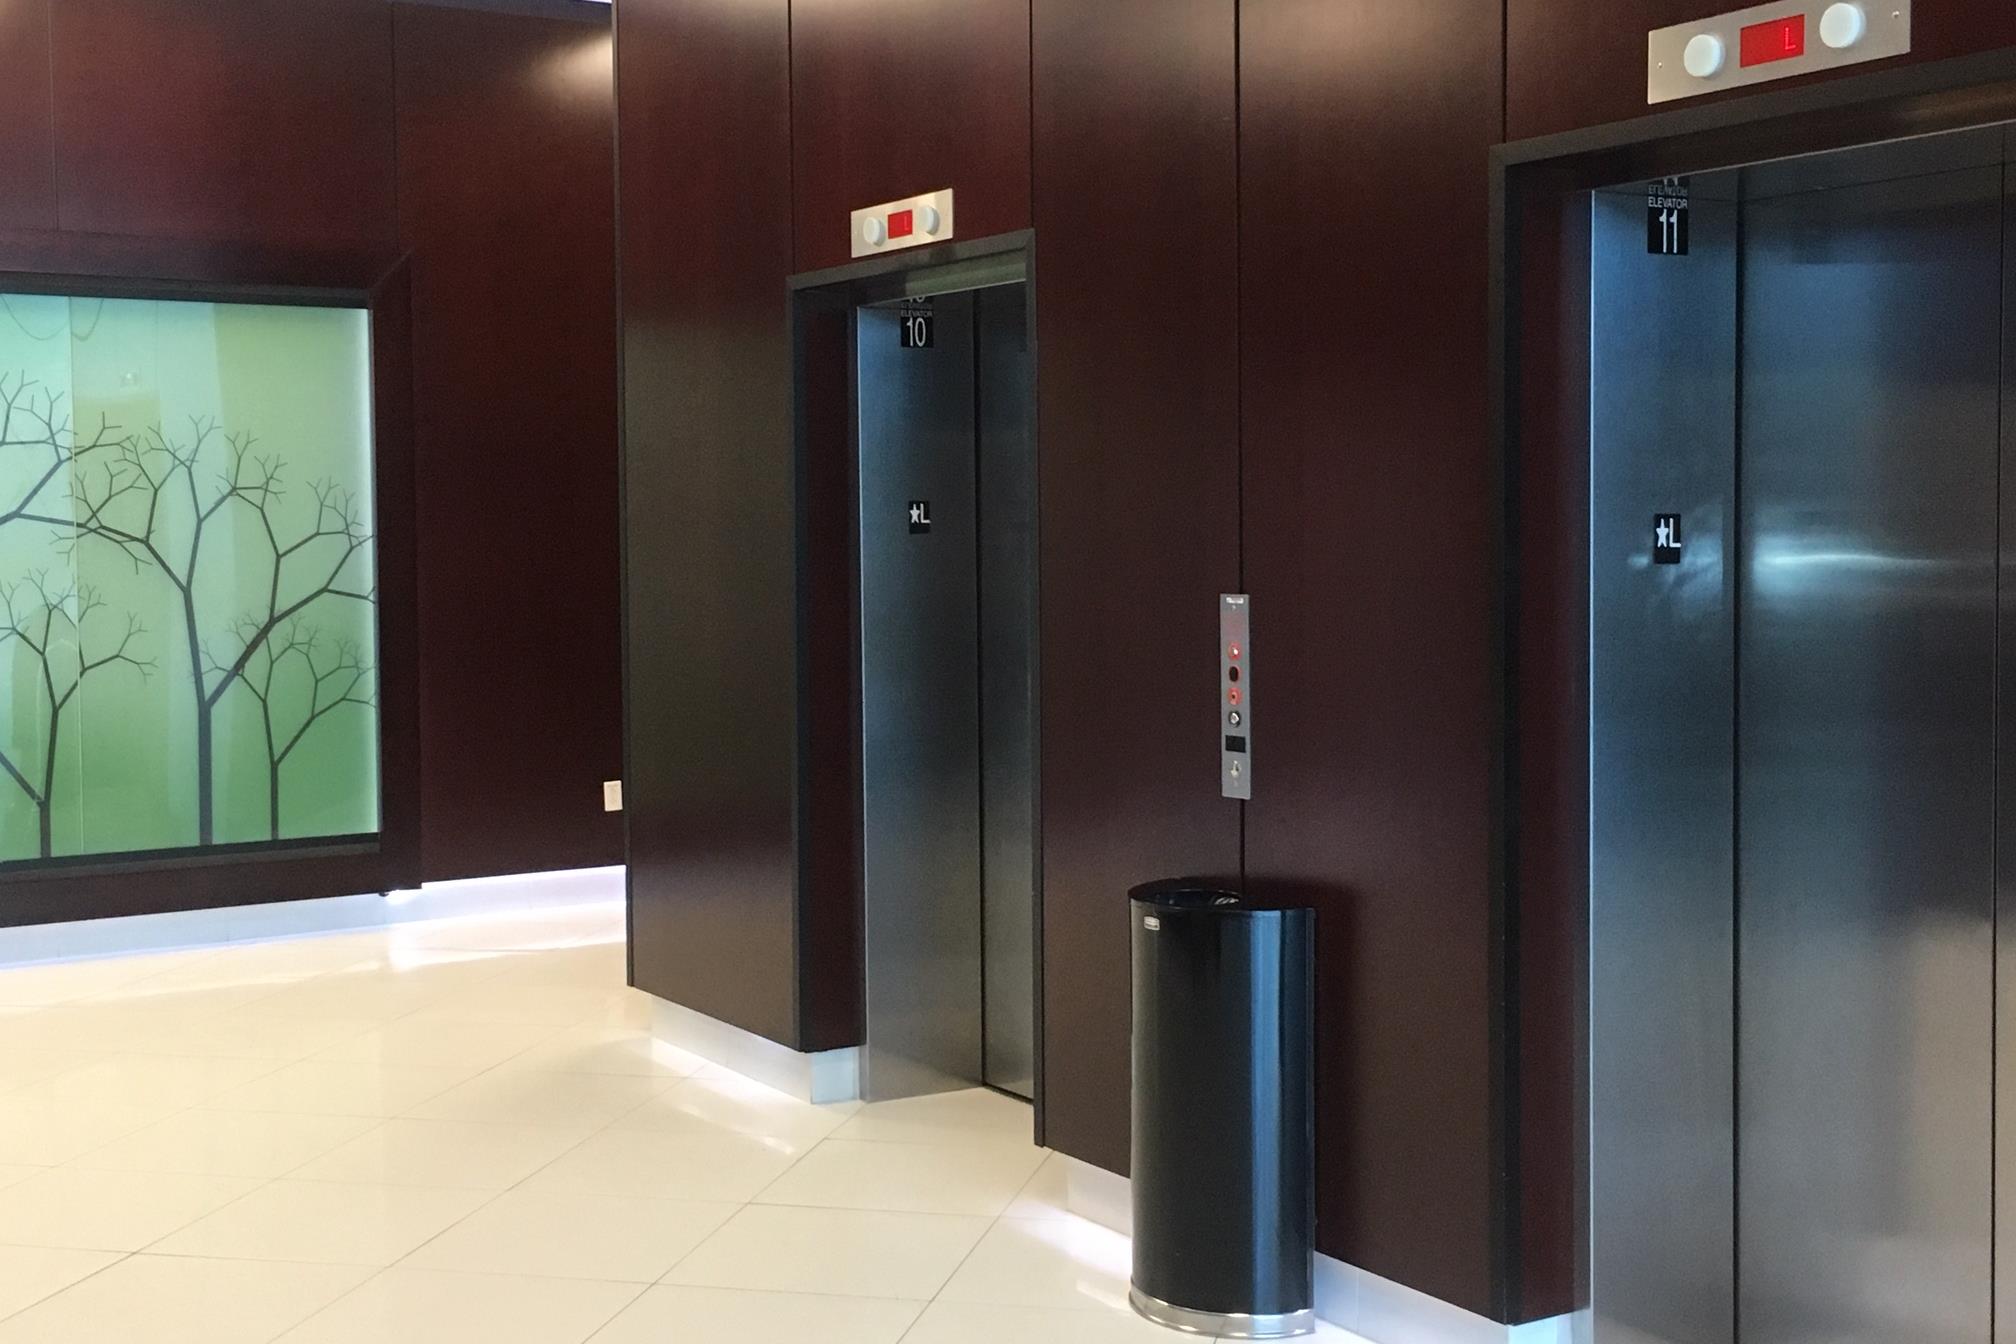 The garage elevators access the hospital lobby